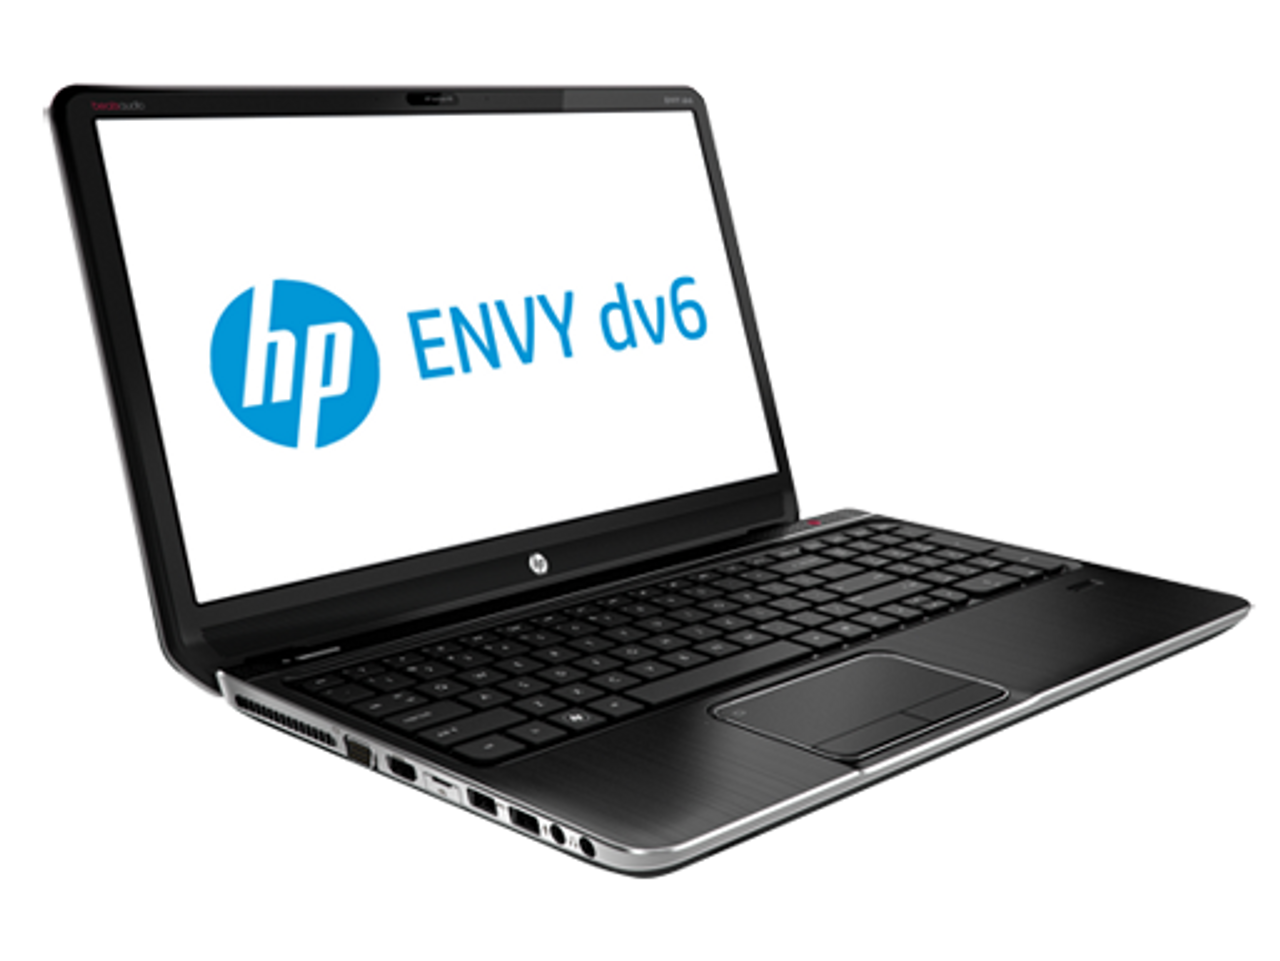 HP Laptop dv6 Intel Core i5 (3rd Gen) 2.50Ghz 15.6" 6GB RAM 640GB HDD Webcam Beats Audio Windows 8.1 Computer Show